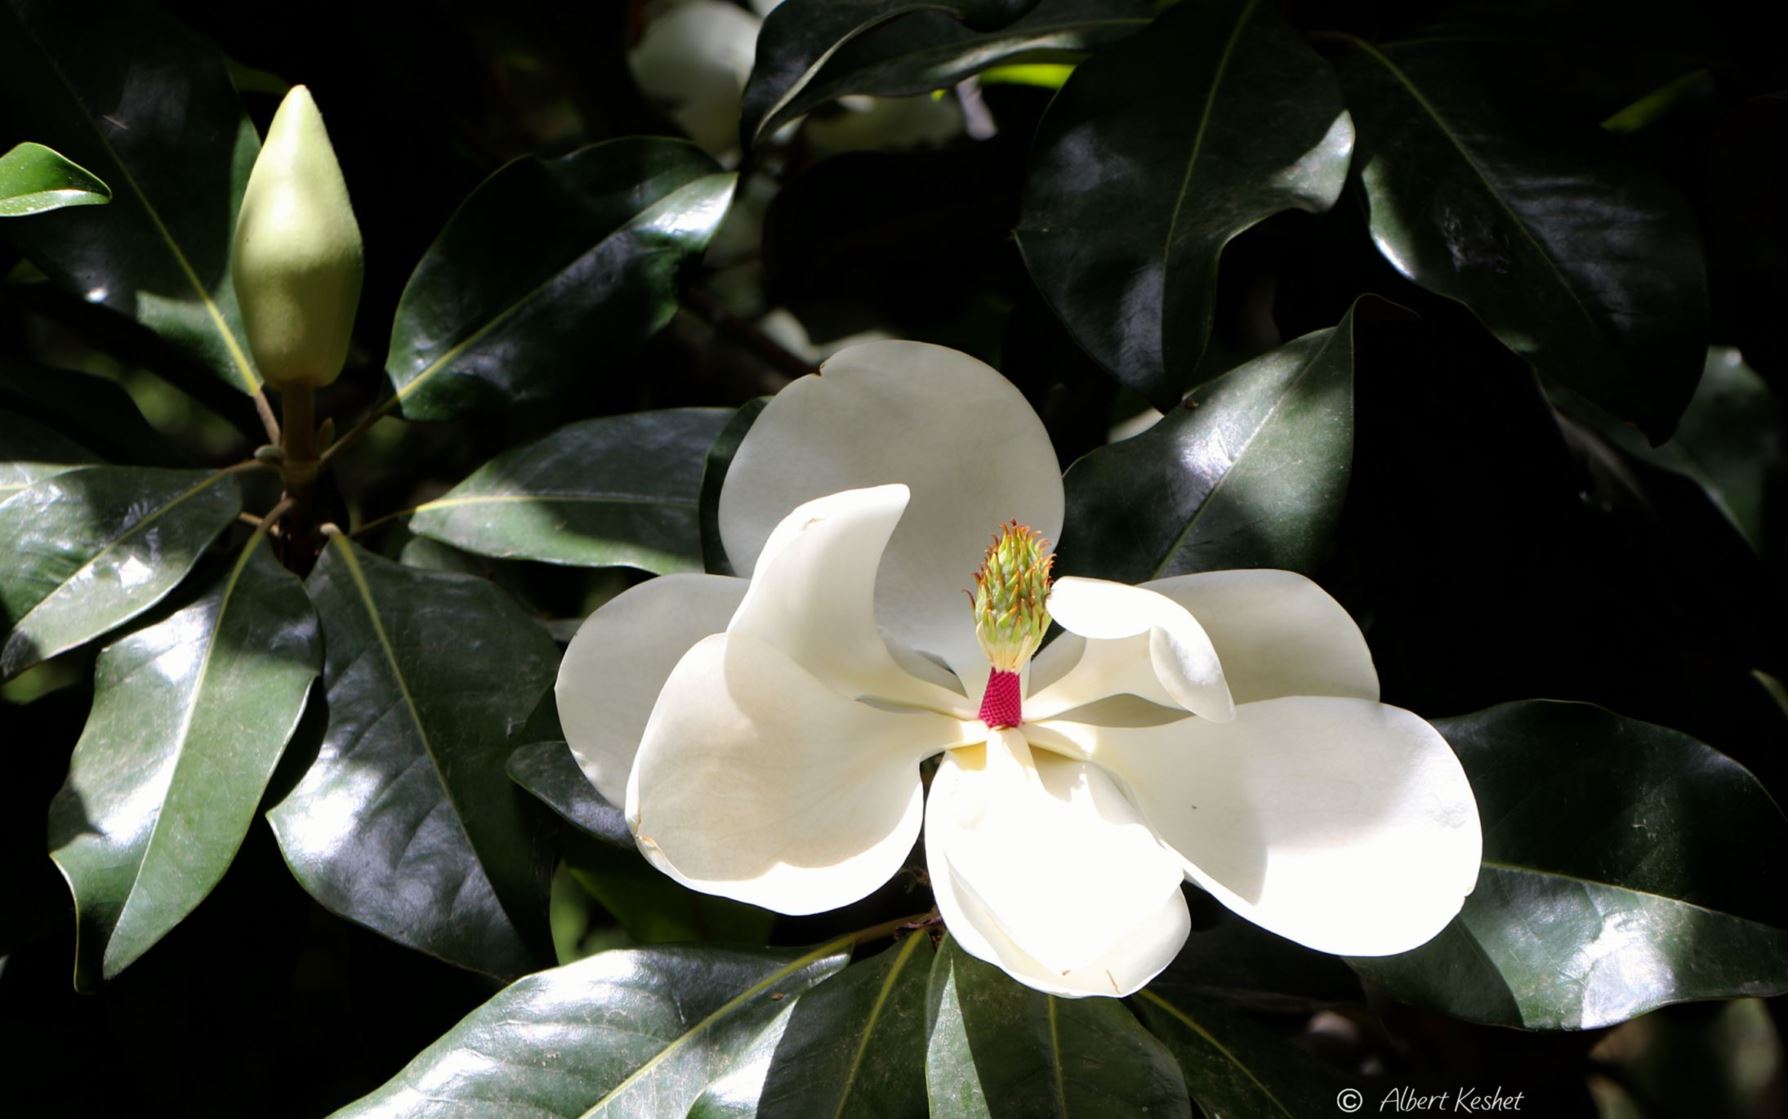 Magnolia grandiflora - Southern Magnolia, Bull Bay, מגנוליה גדולת-פרחים, מגנוליה גדולת-פרחים